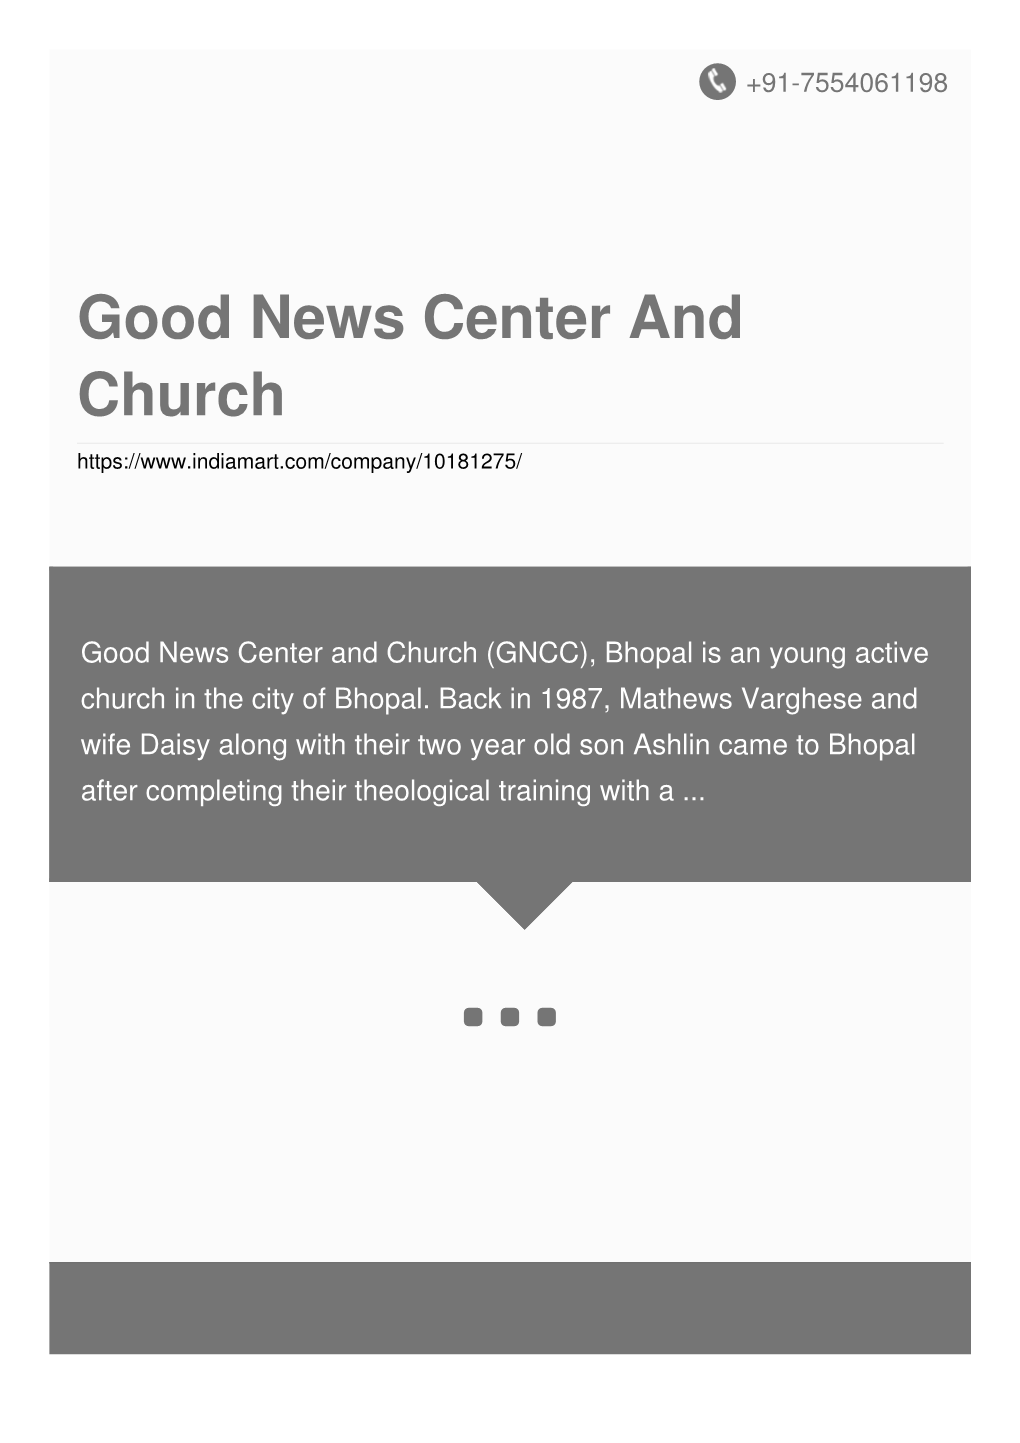 Good News Center and Church